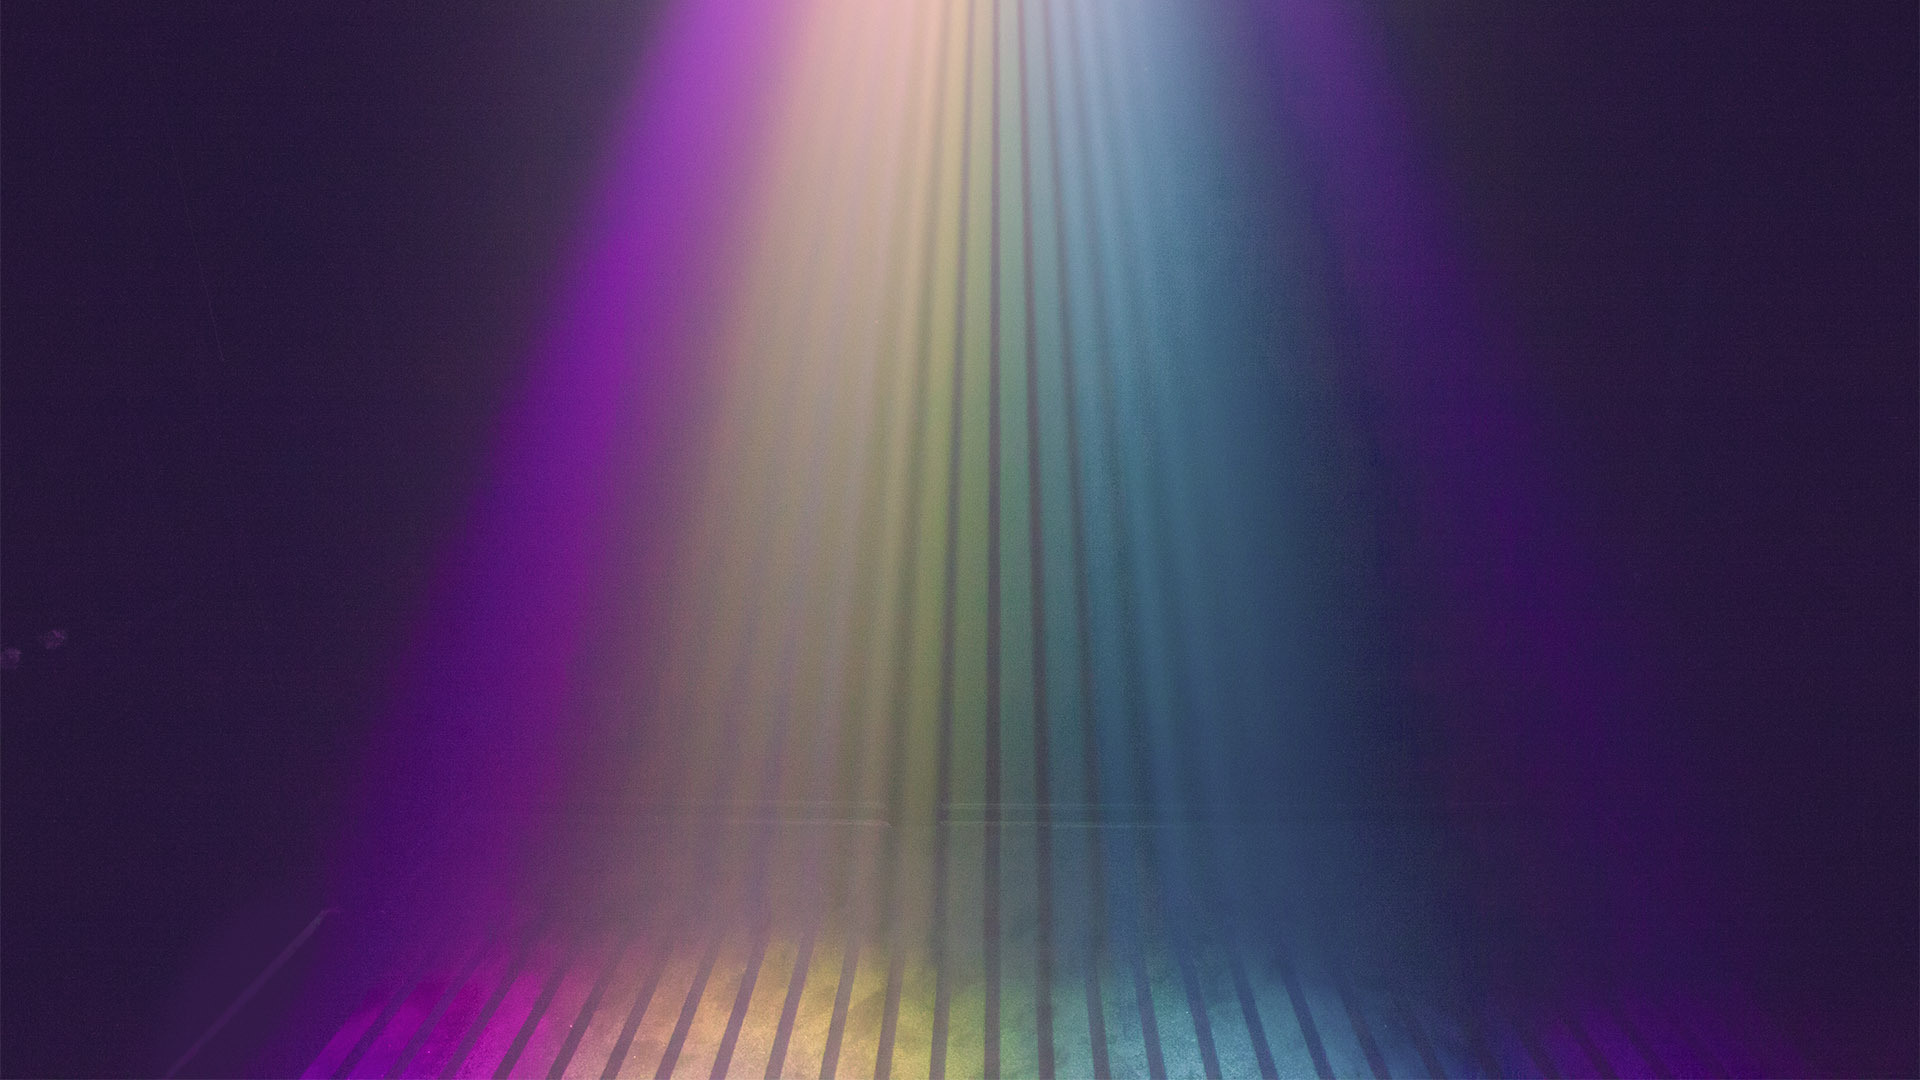 Talk to Light at SXSW: Hey Google, talk like a rainbow